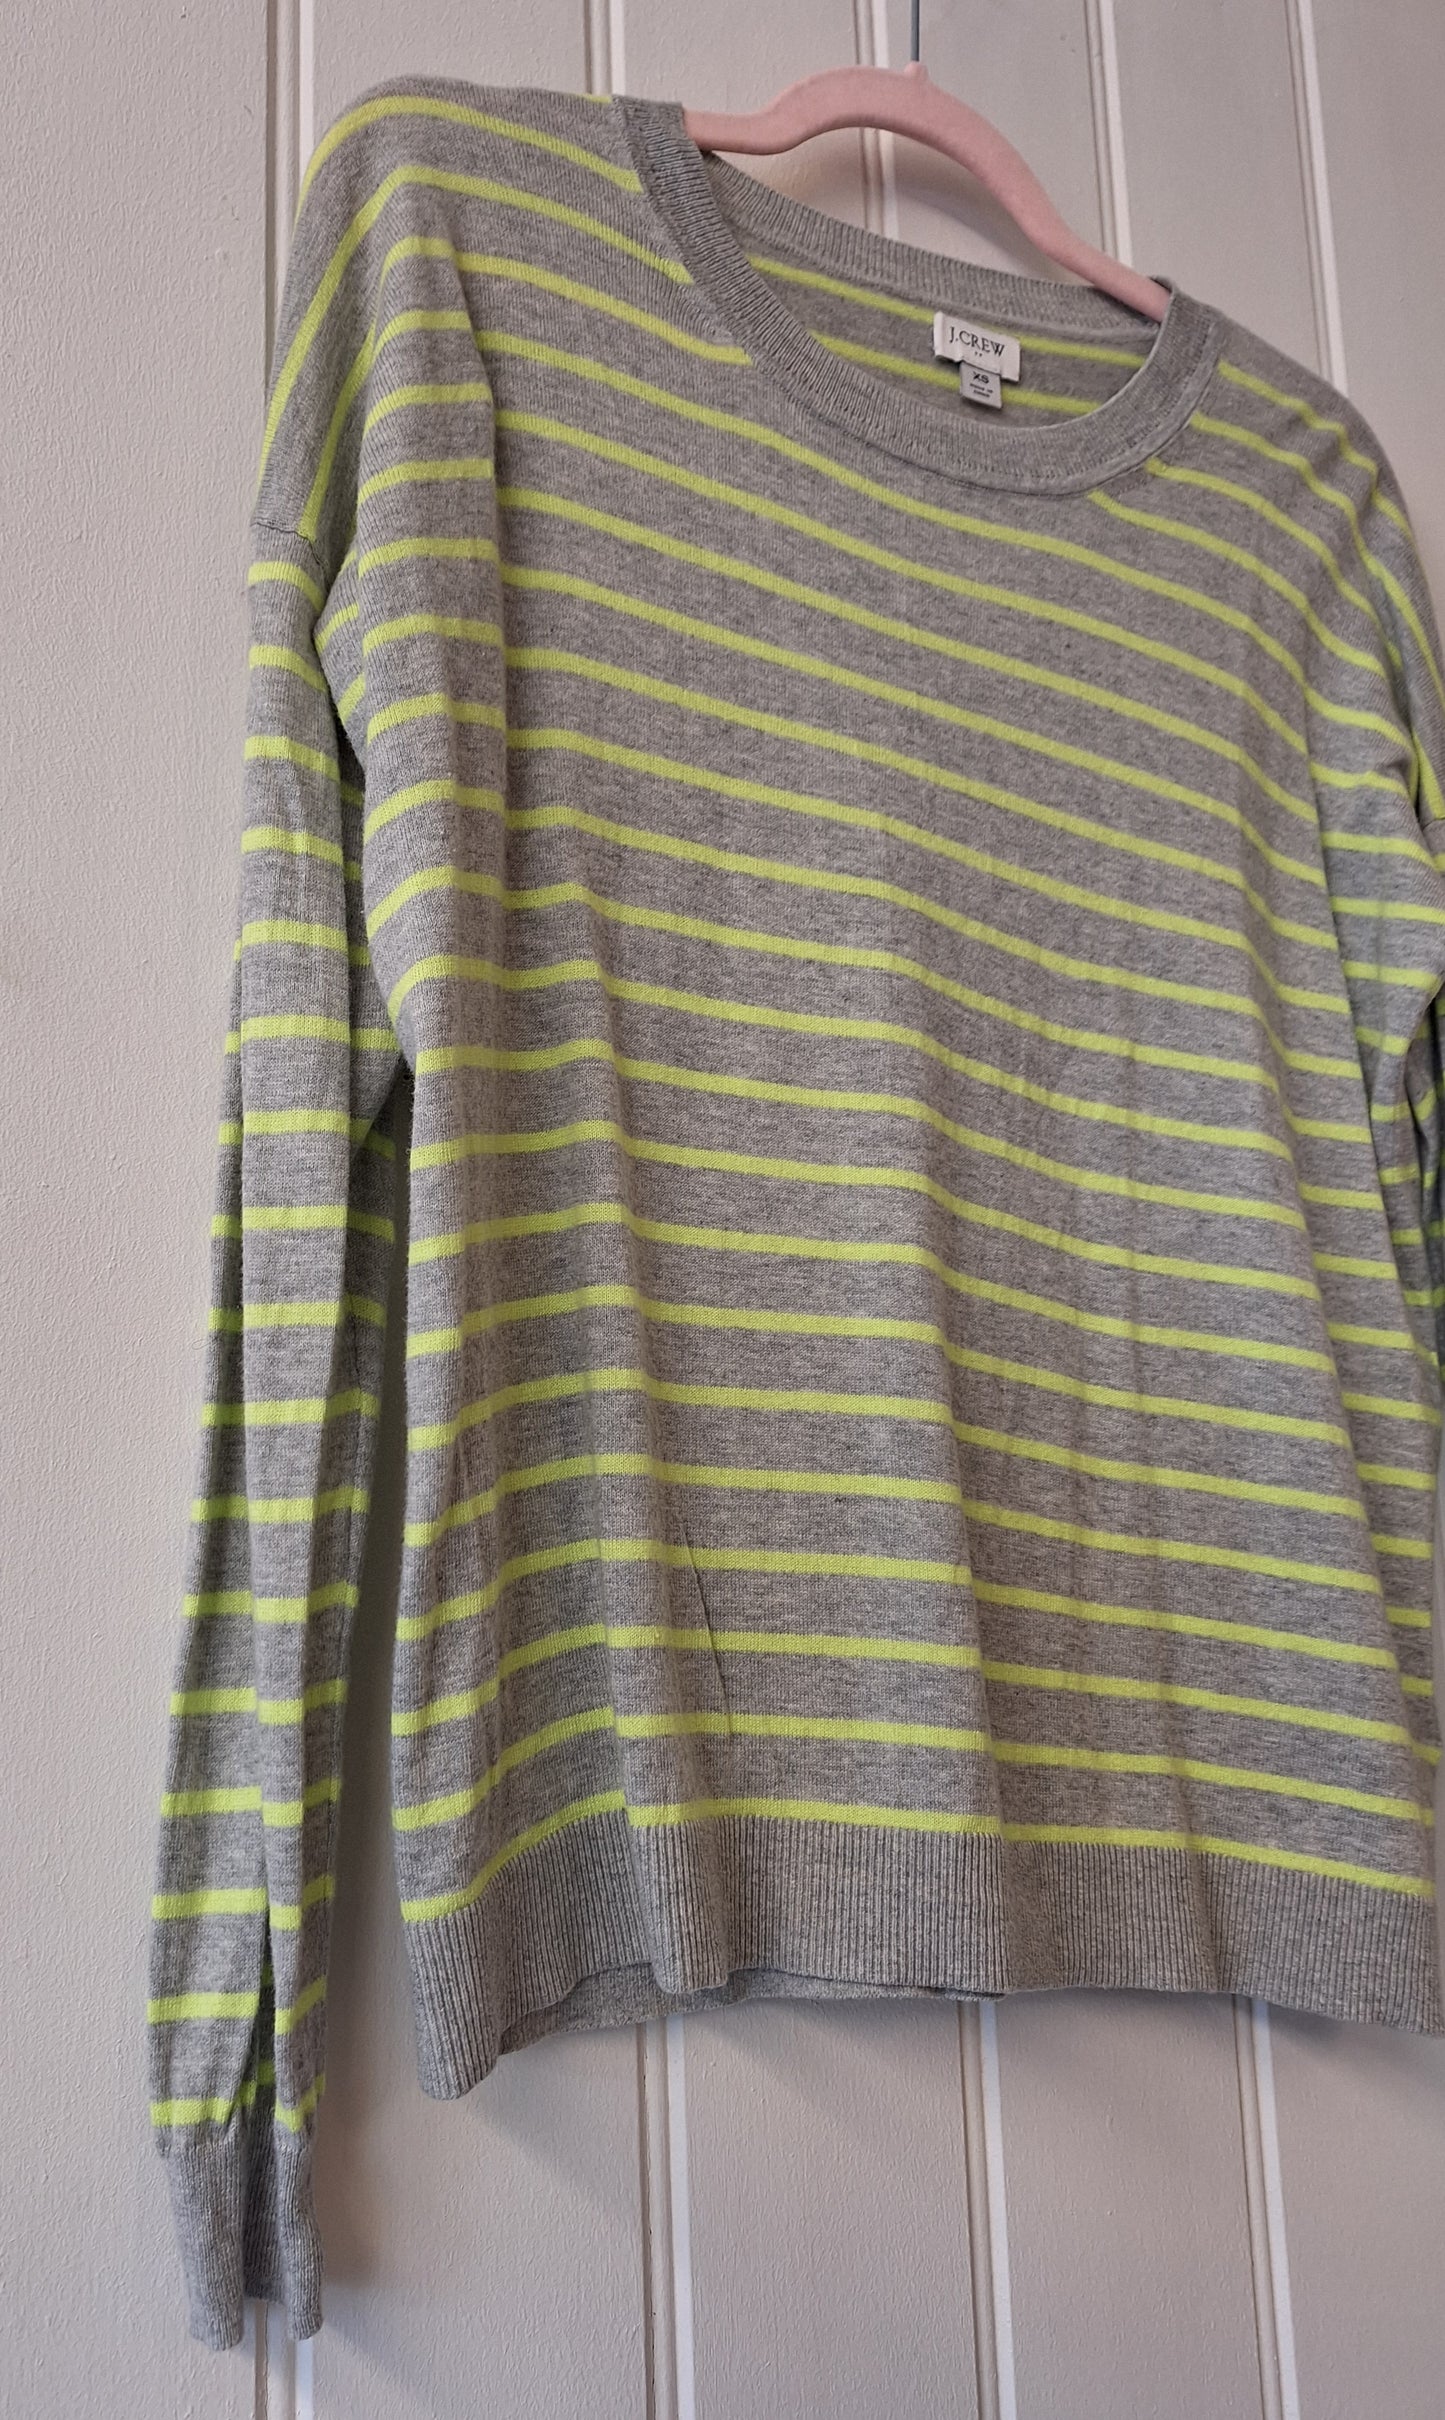 J Crew grey & lime striped knit XS